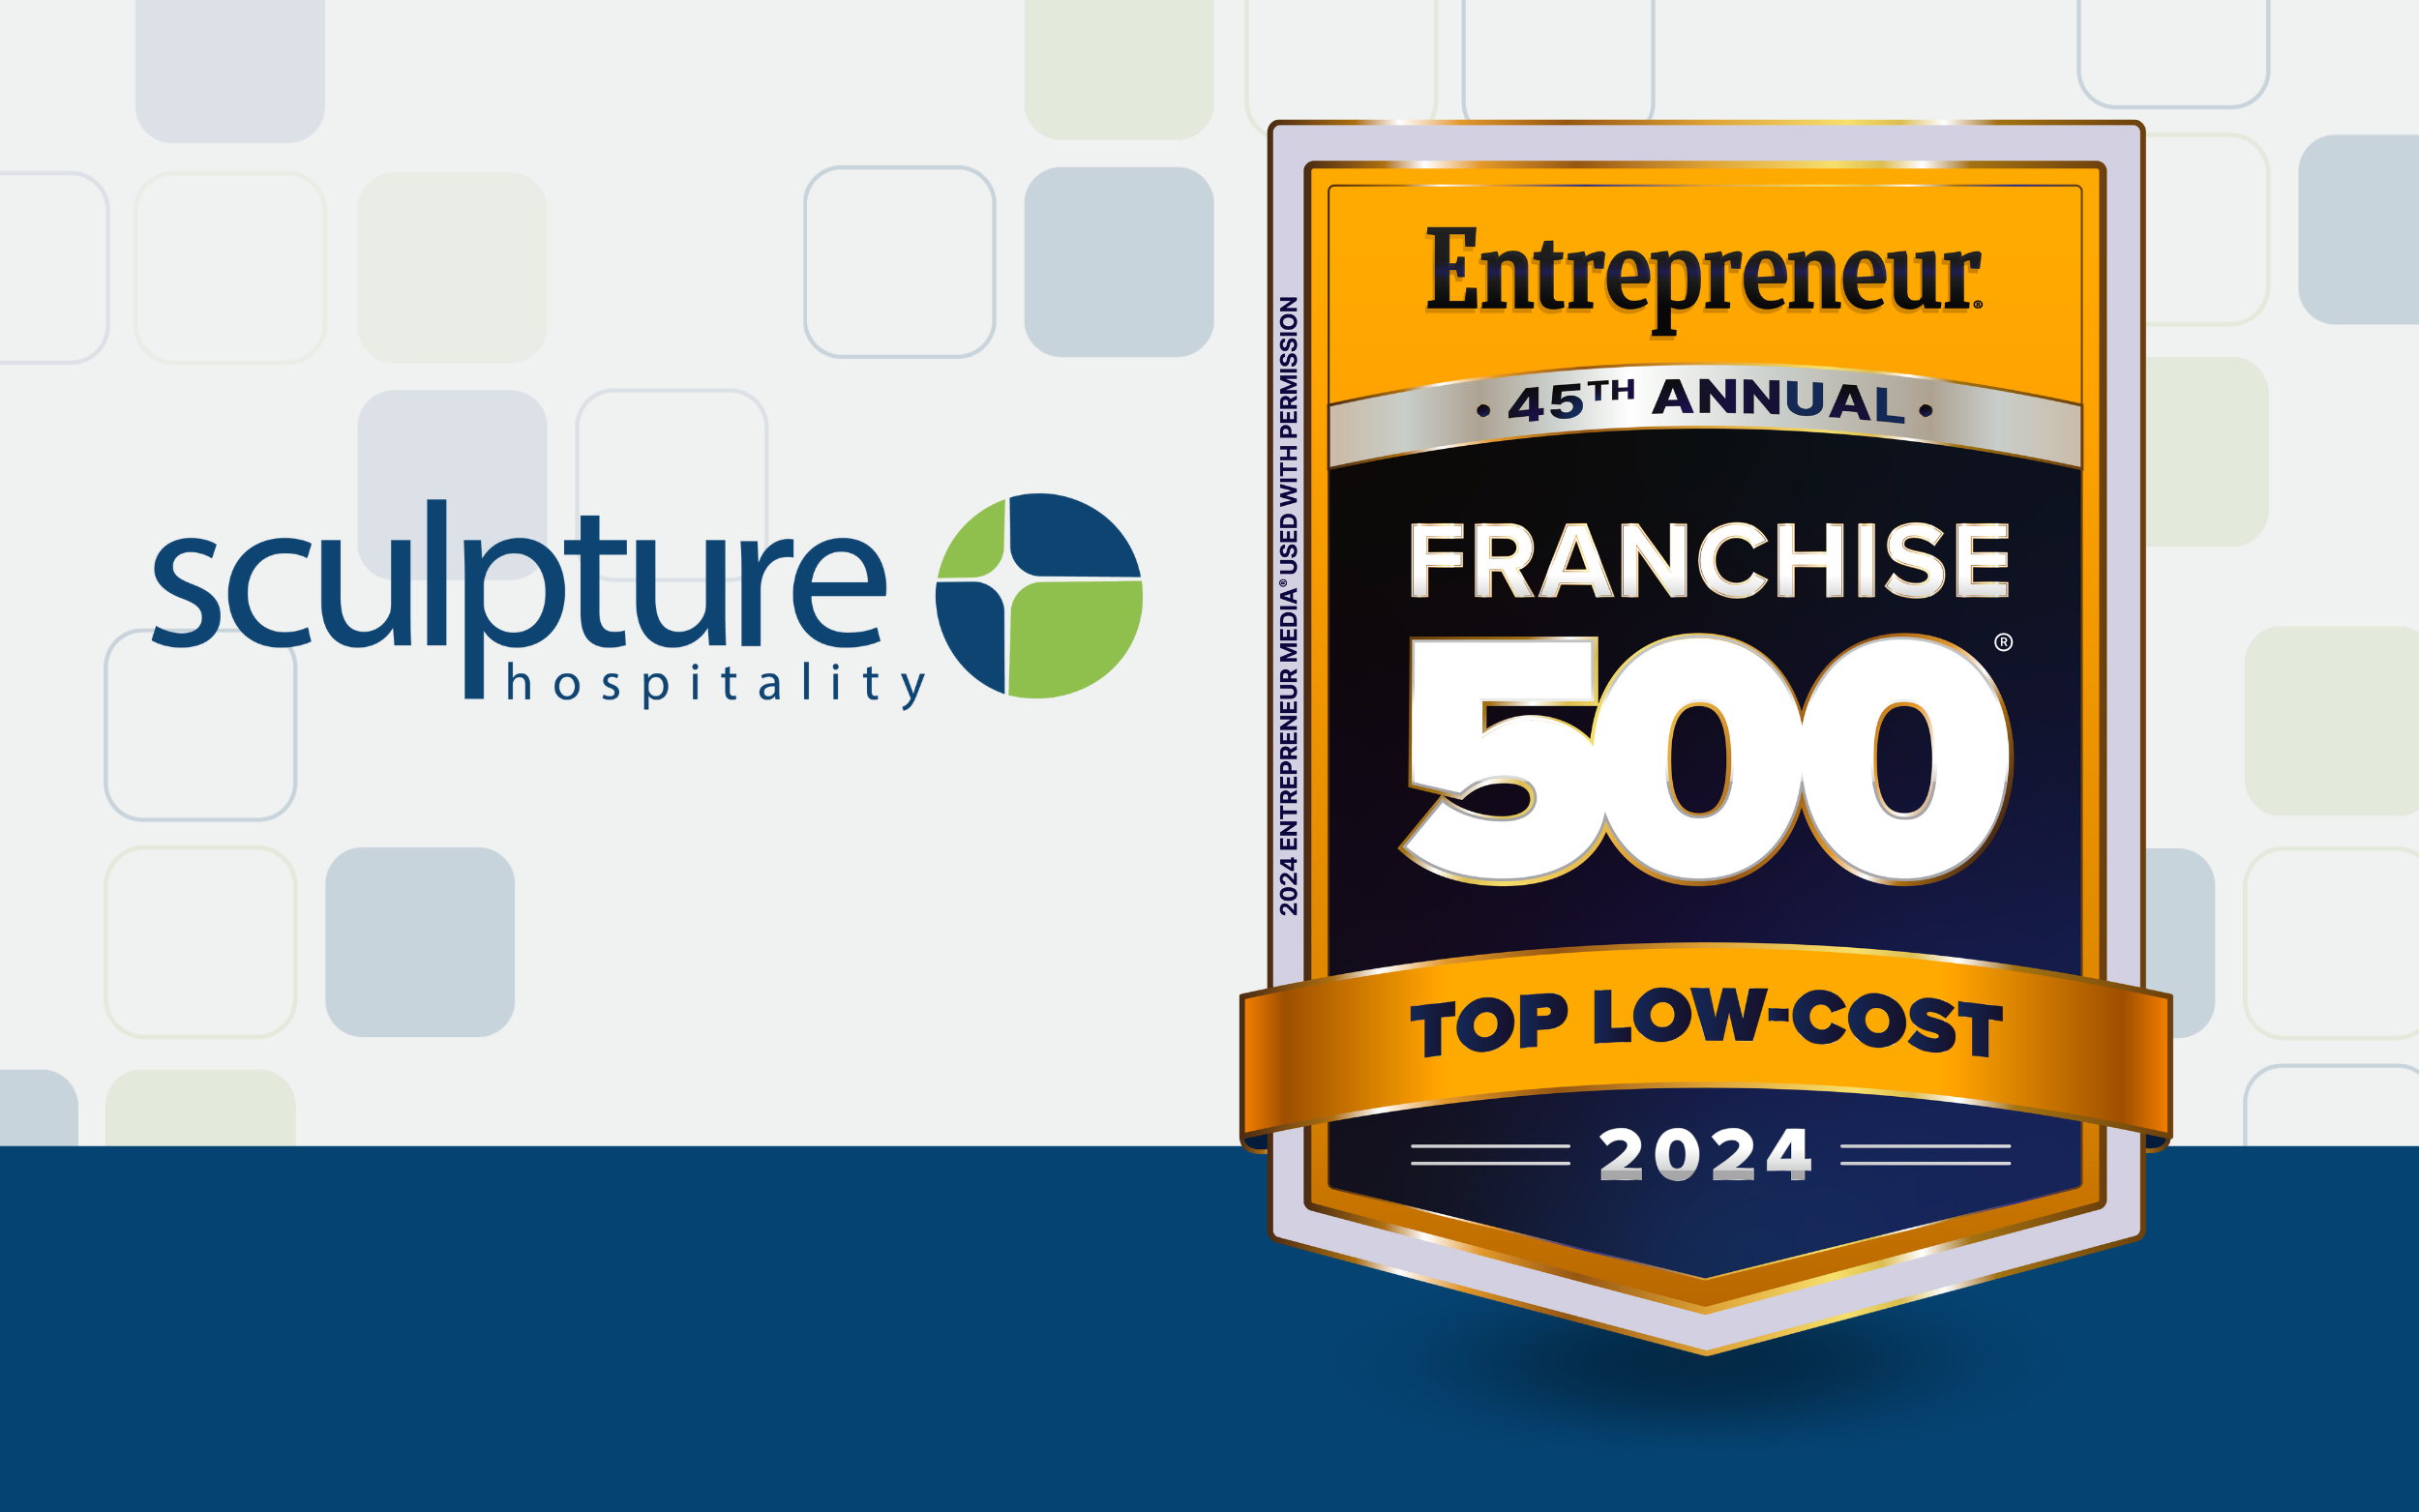 Top low-cost franchise entrepreneur icon